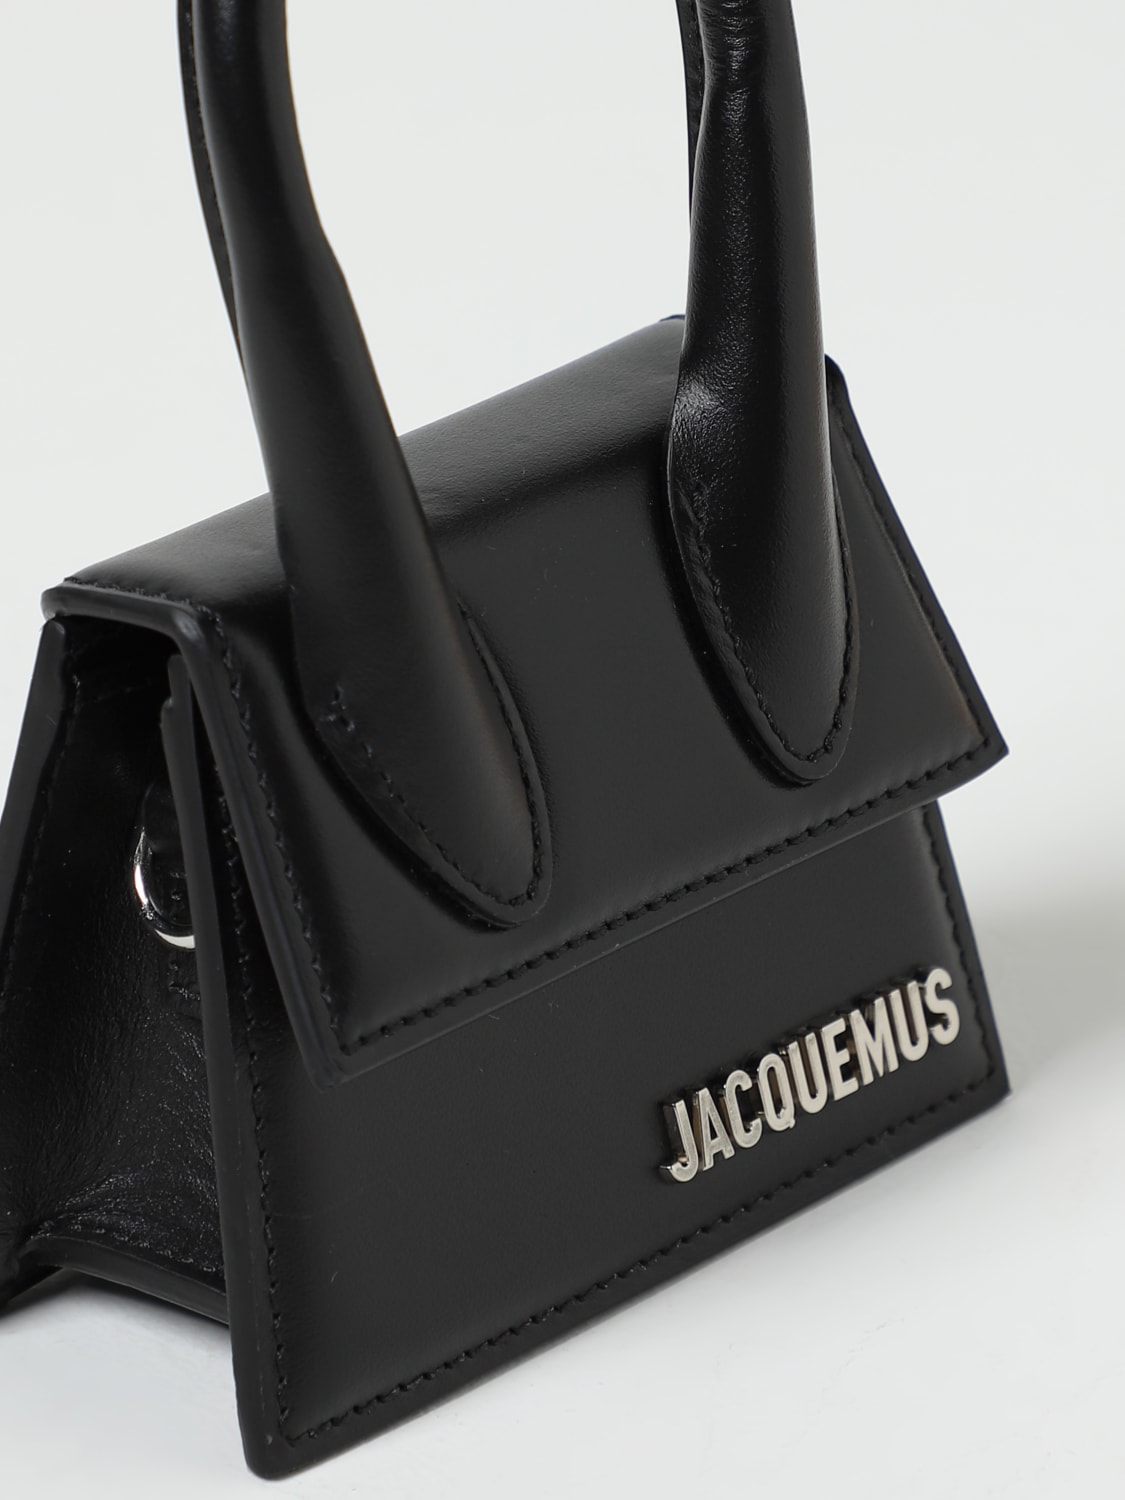 Jacquemus Le Grand Chiquito Bags In Black